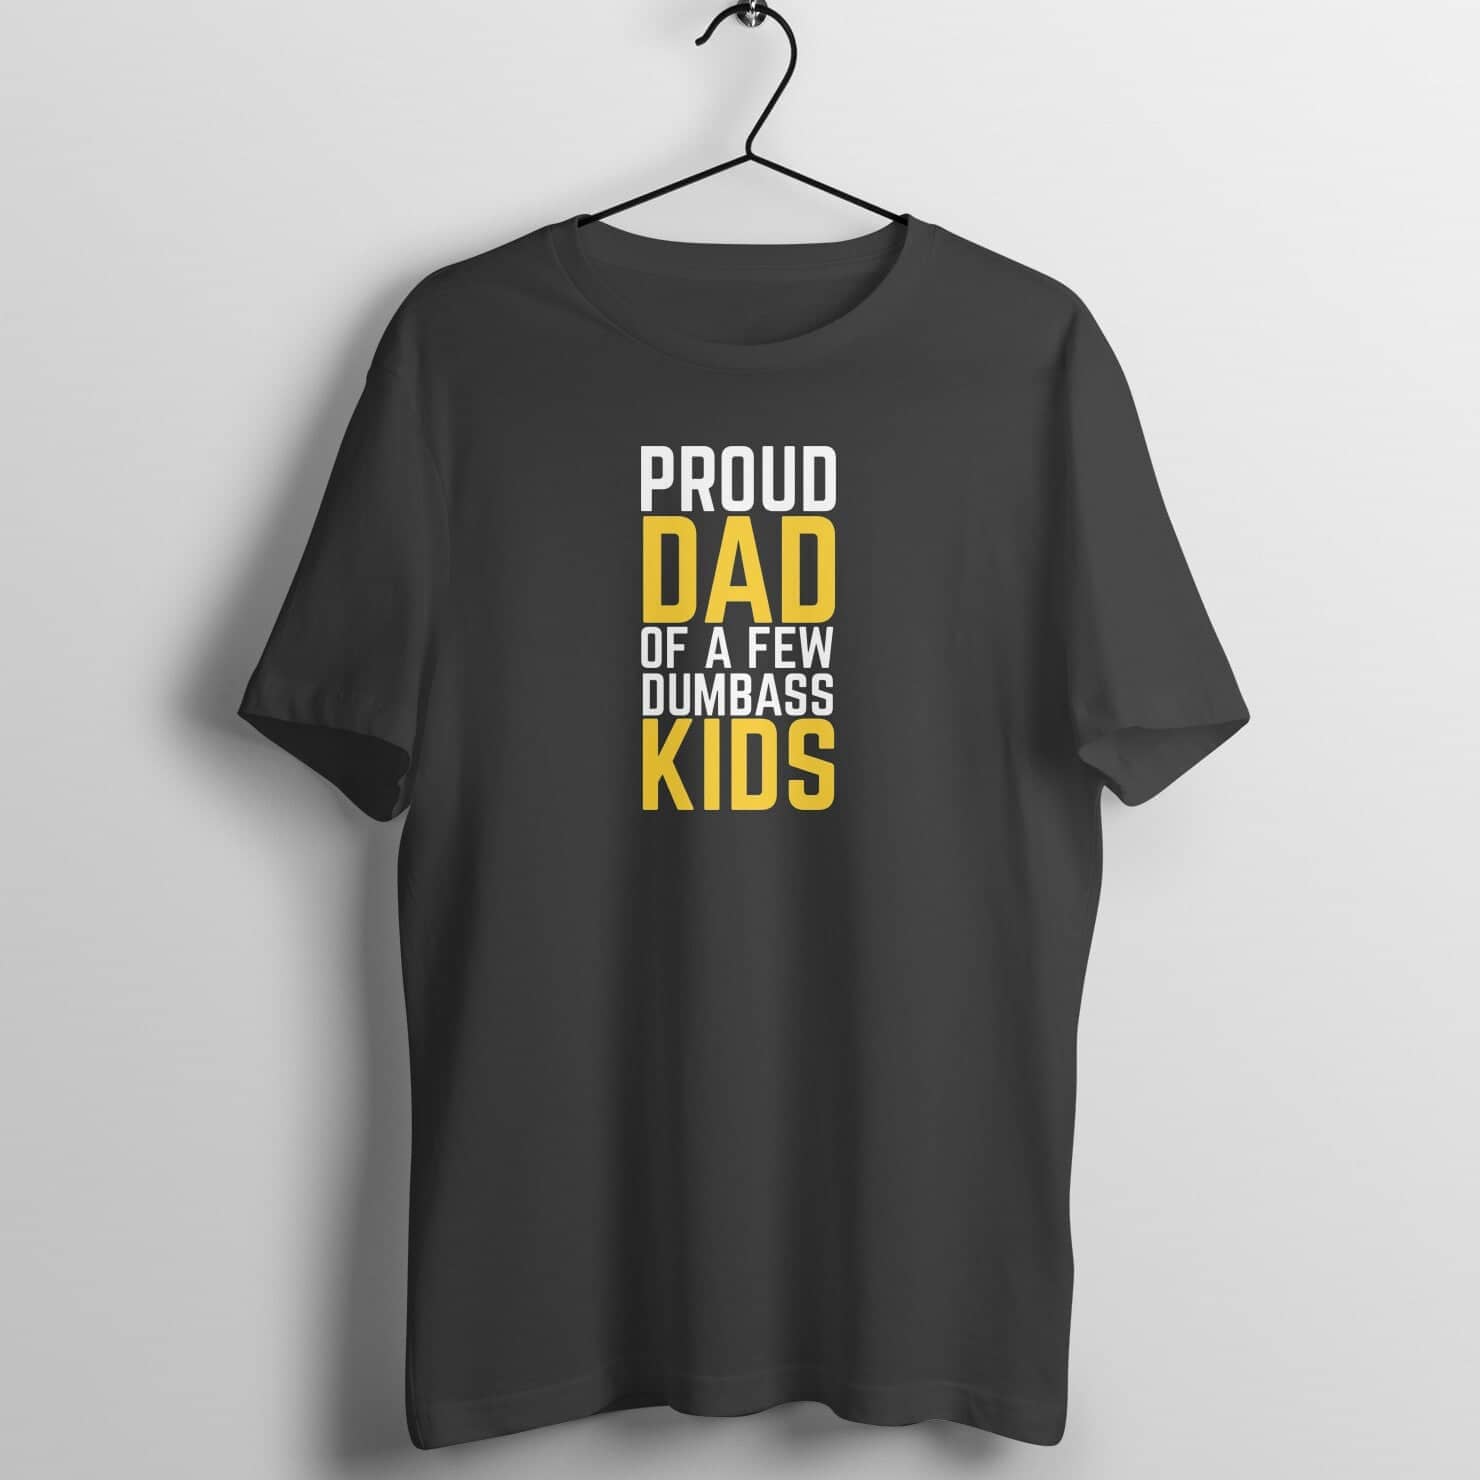 Proud Dad Funny Middle Age Parents T Shirt for Men Printrove Black S 